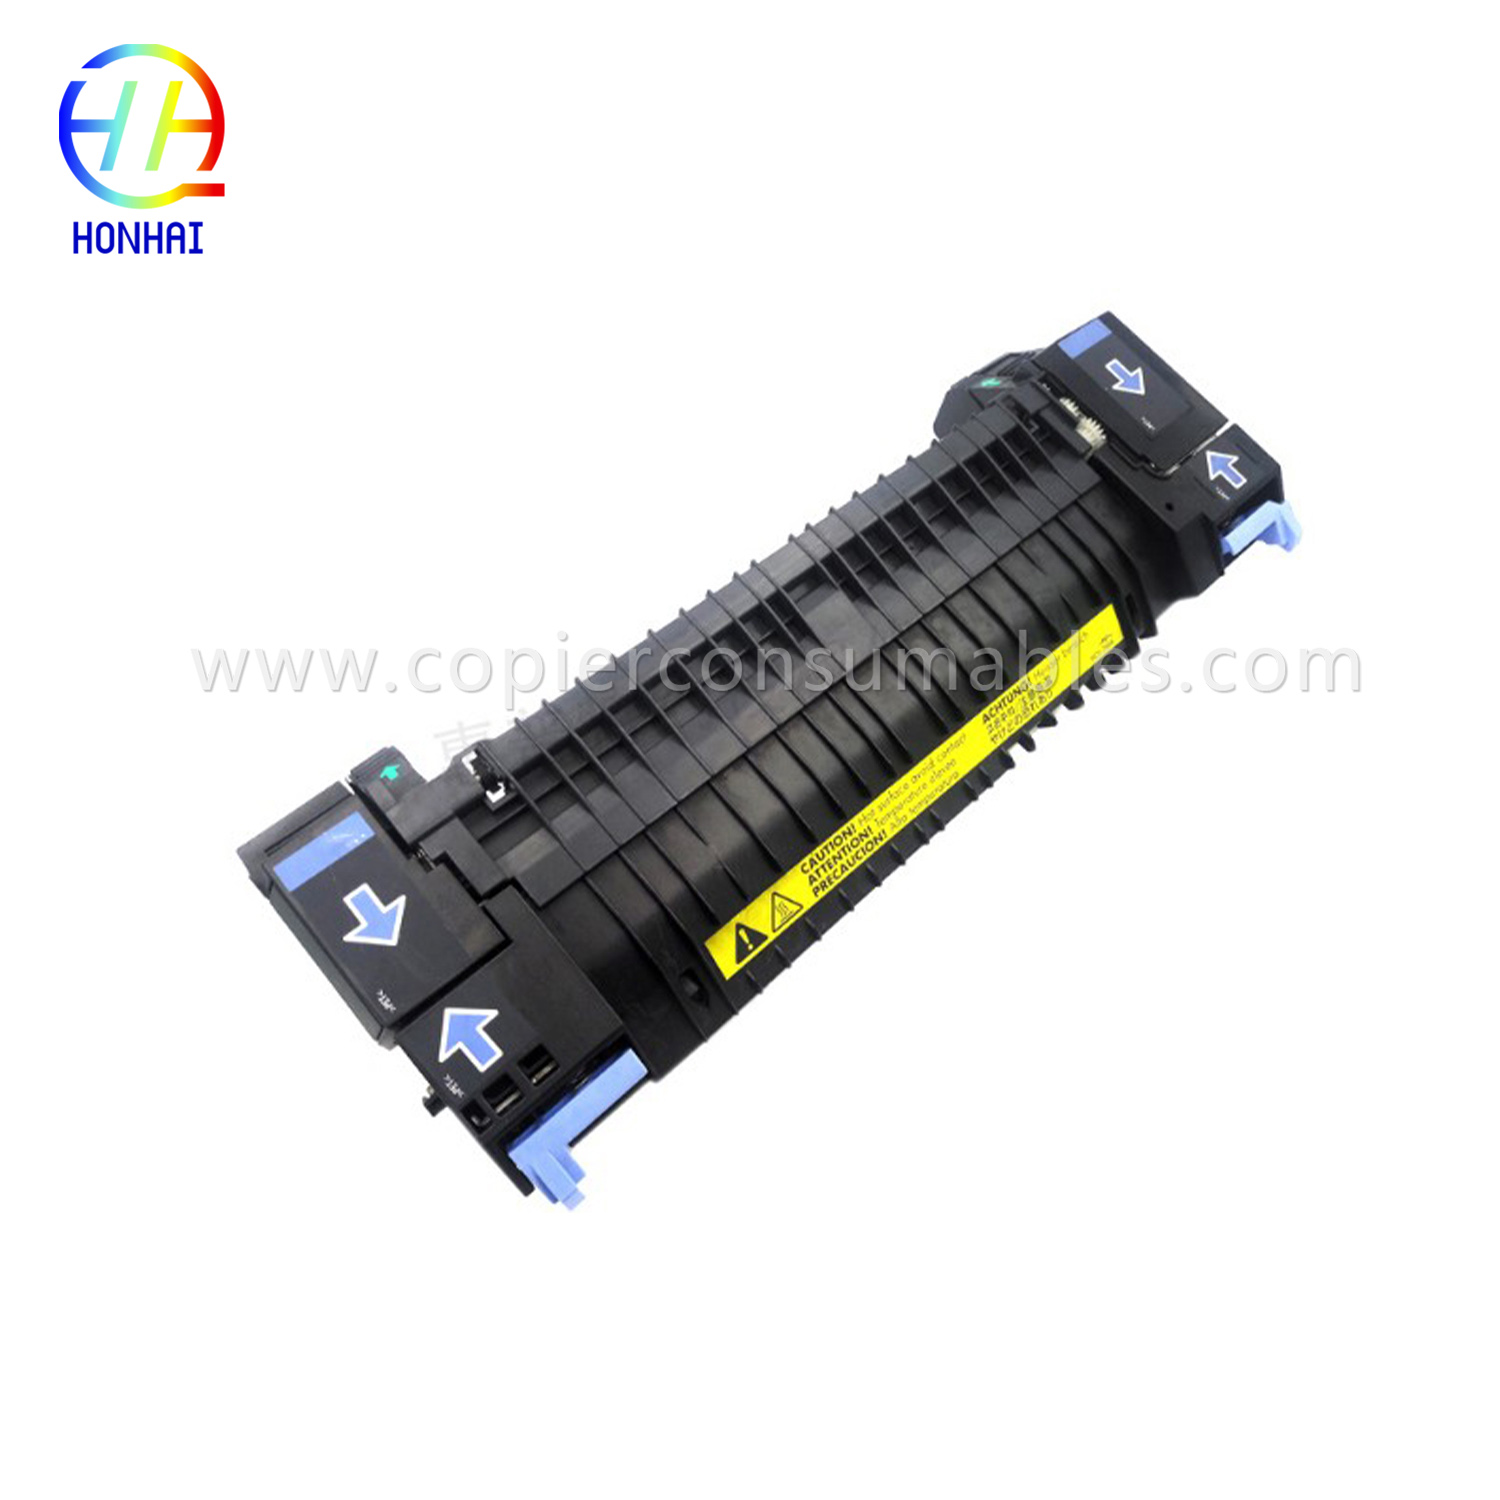 Fuser-assemblage foar HP Color LaserJet 2700 3000 3600 3800 CP3505 (RM1-4348 RM1-2763 RM1-2665) 拷贝